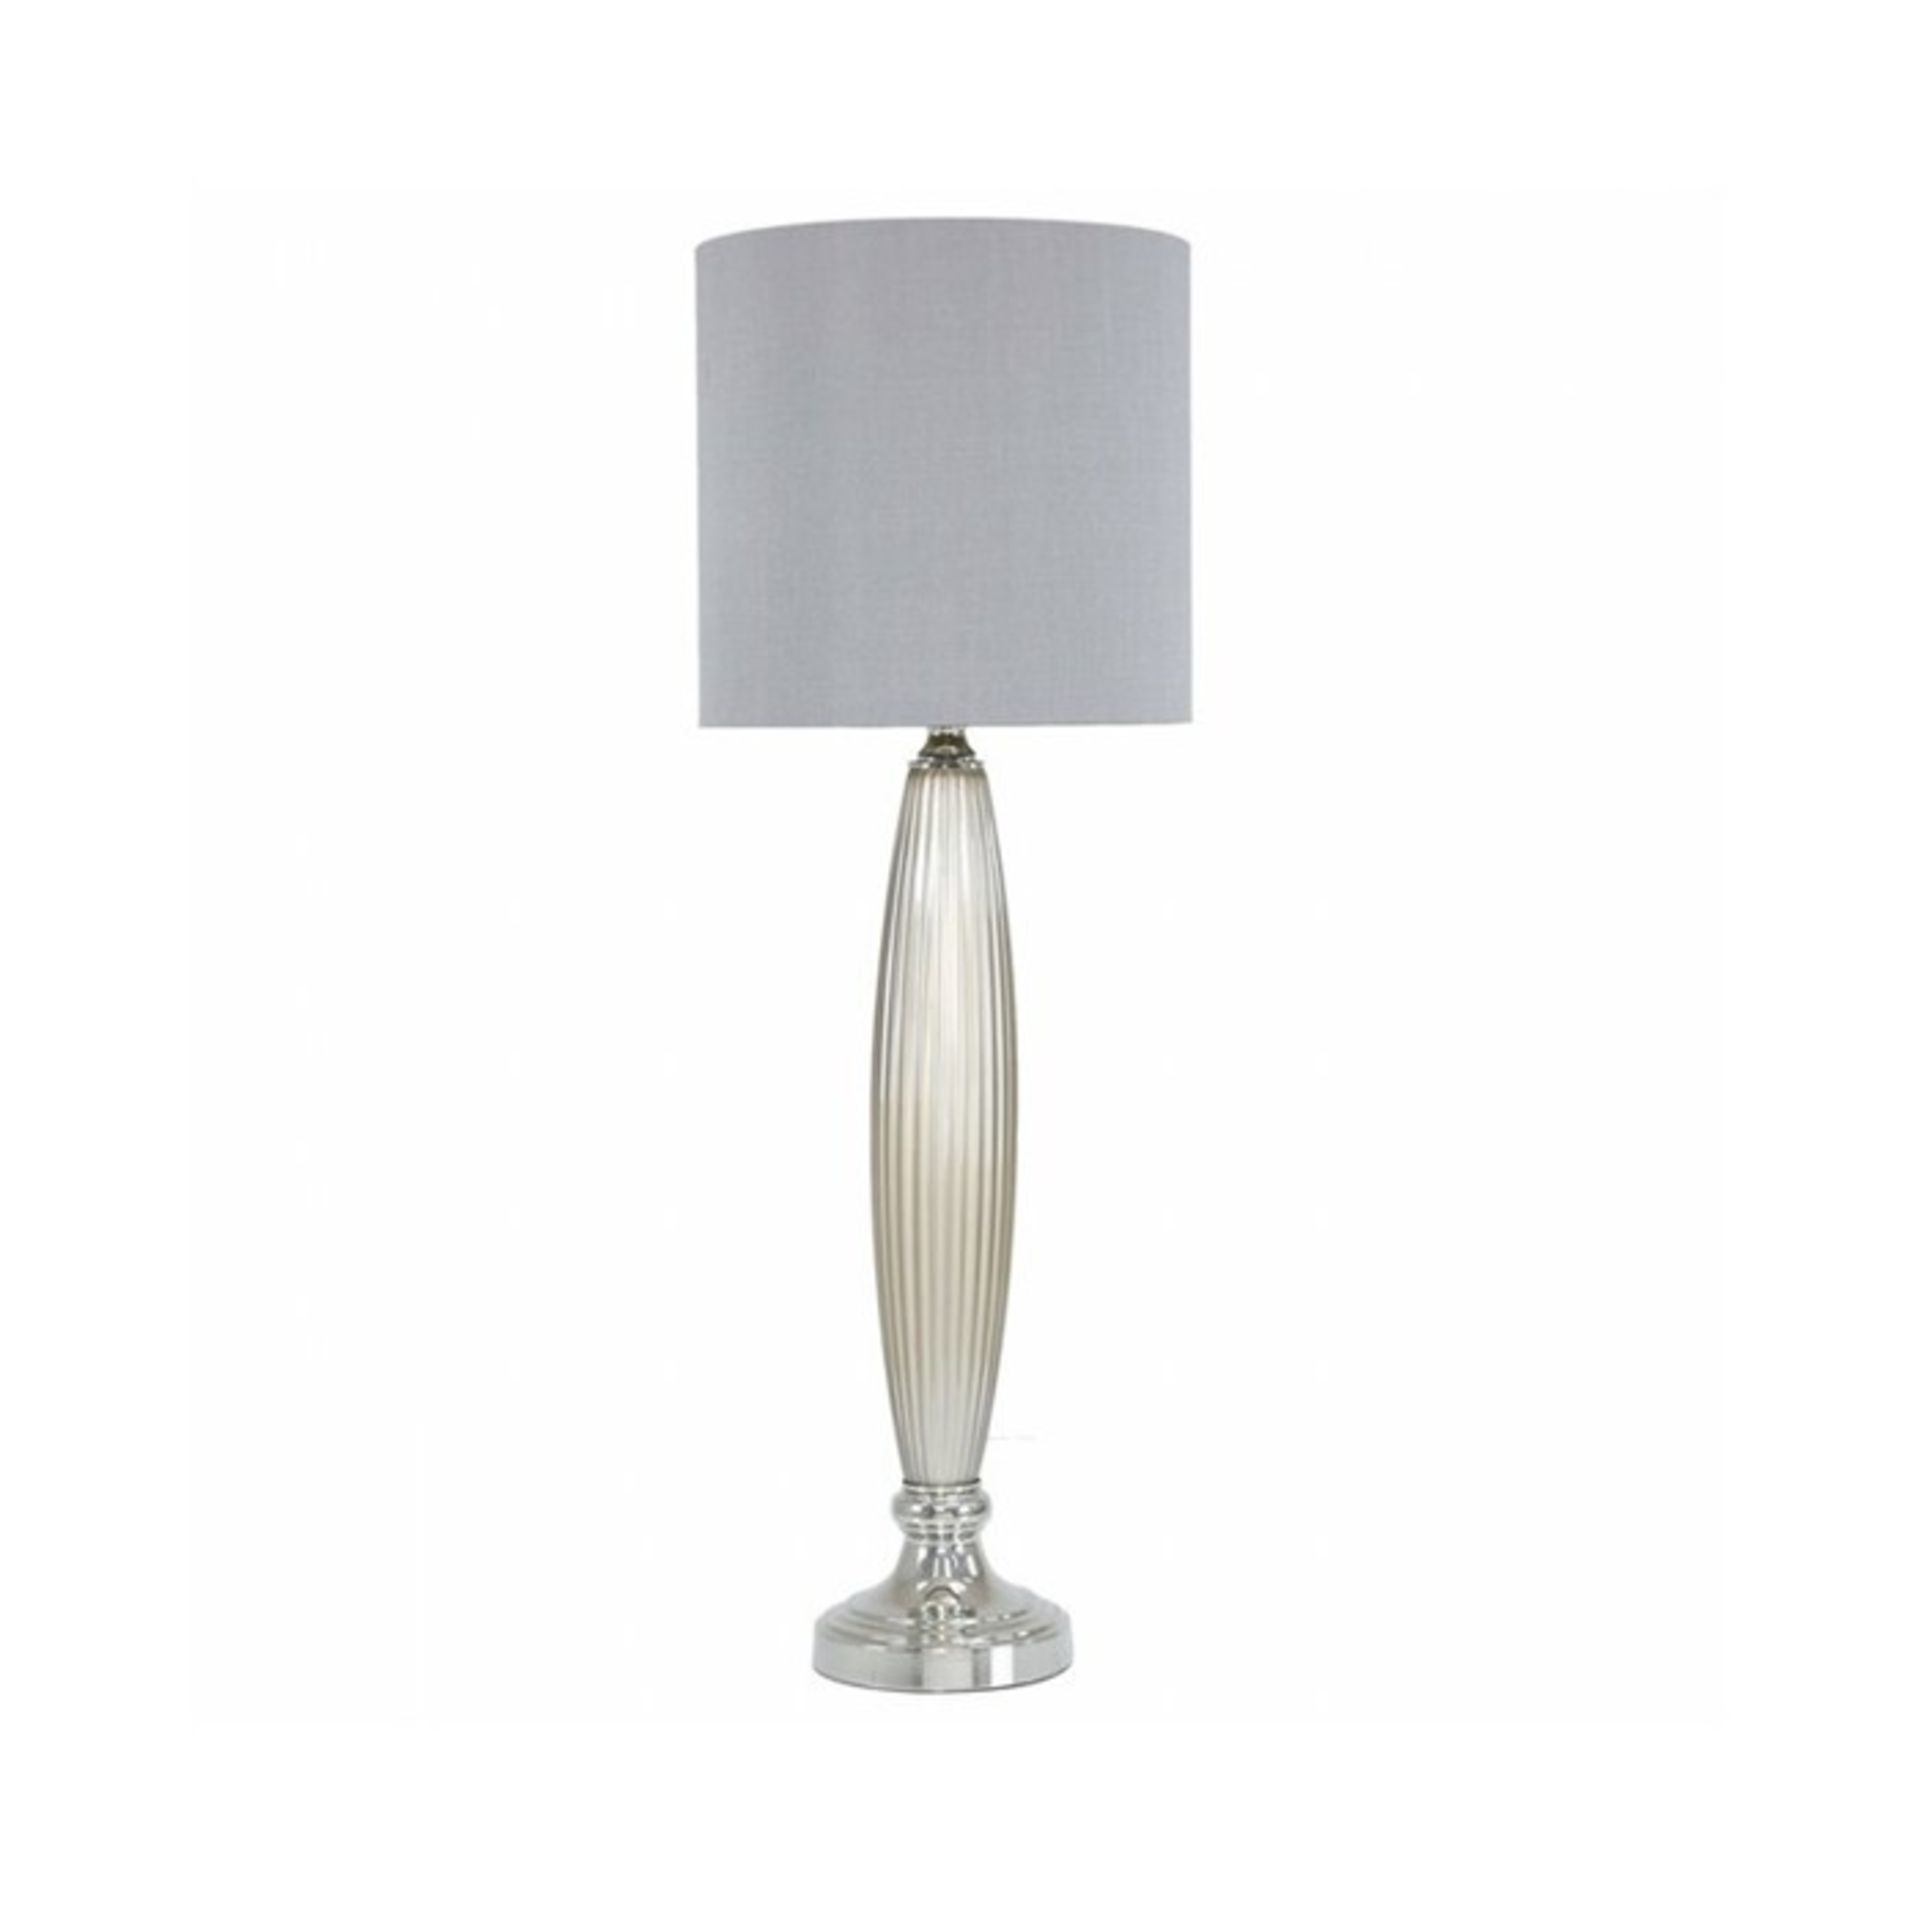 Rosalind Wheeler, Ritter 92.5cm Table Lamp (DARK GREY SHADE) - RRP £116.99 (CBFI1299 - 20847/21) 2B